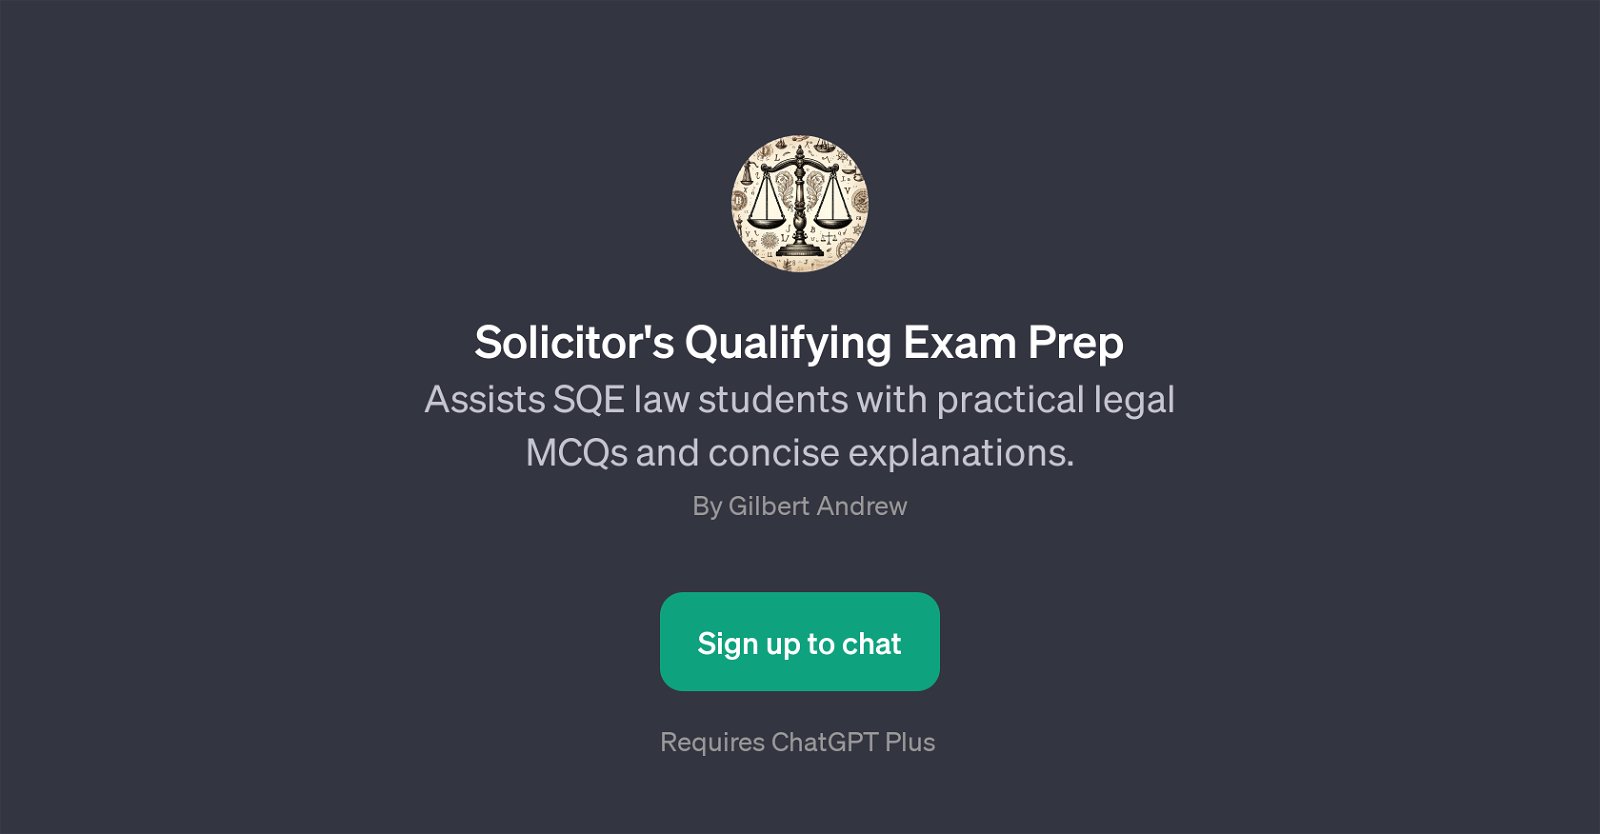 Solicitor's Qualifying Exam Prep website